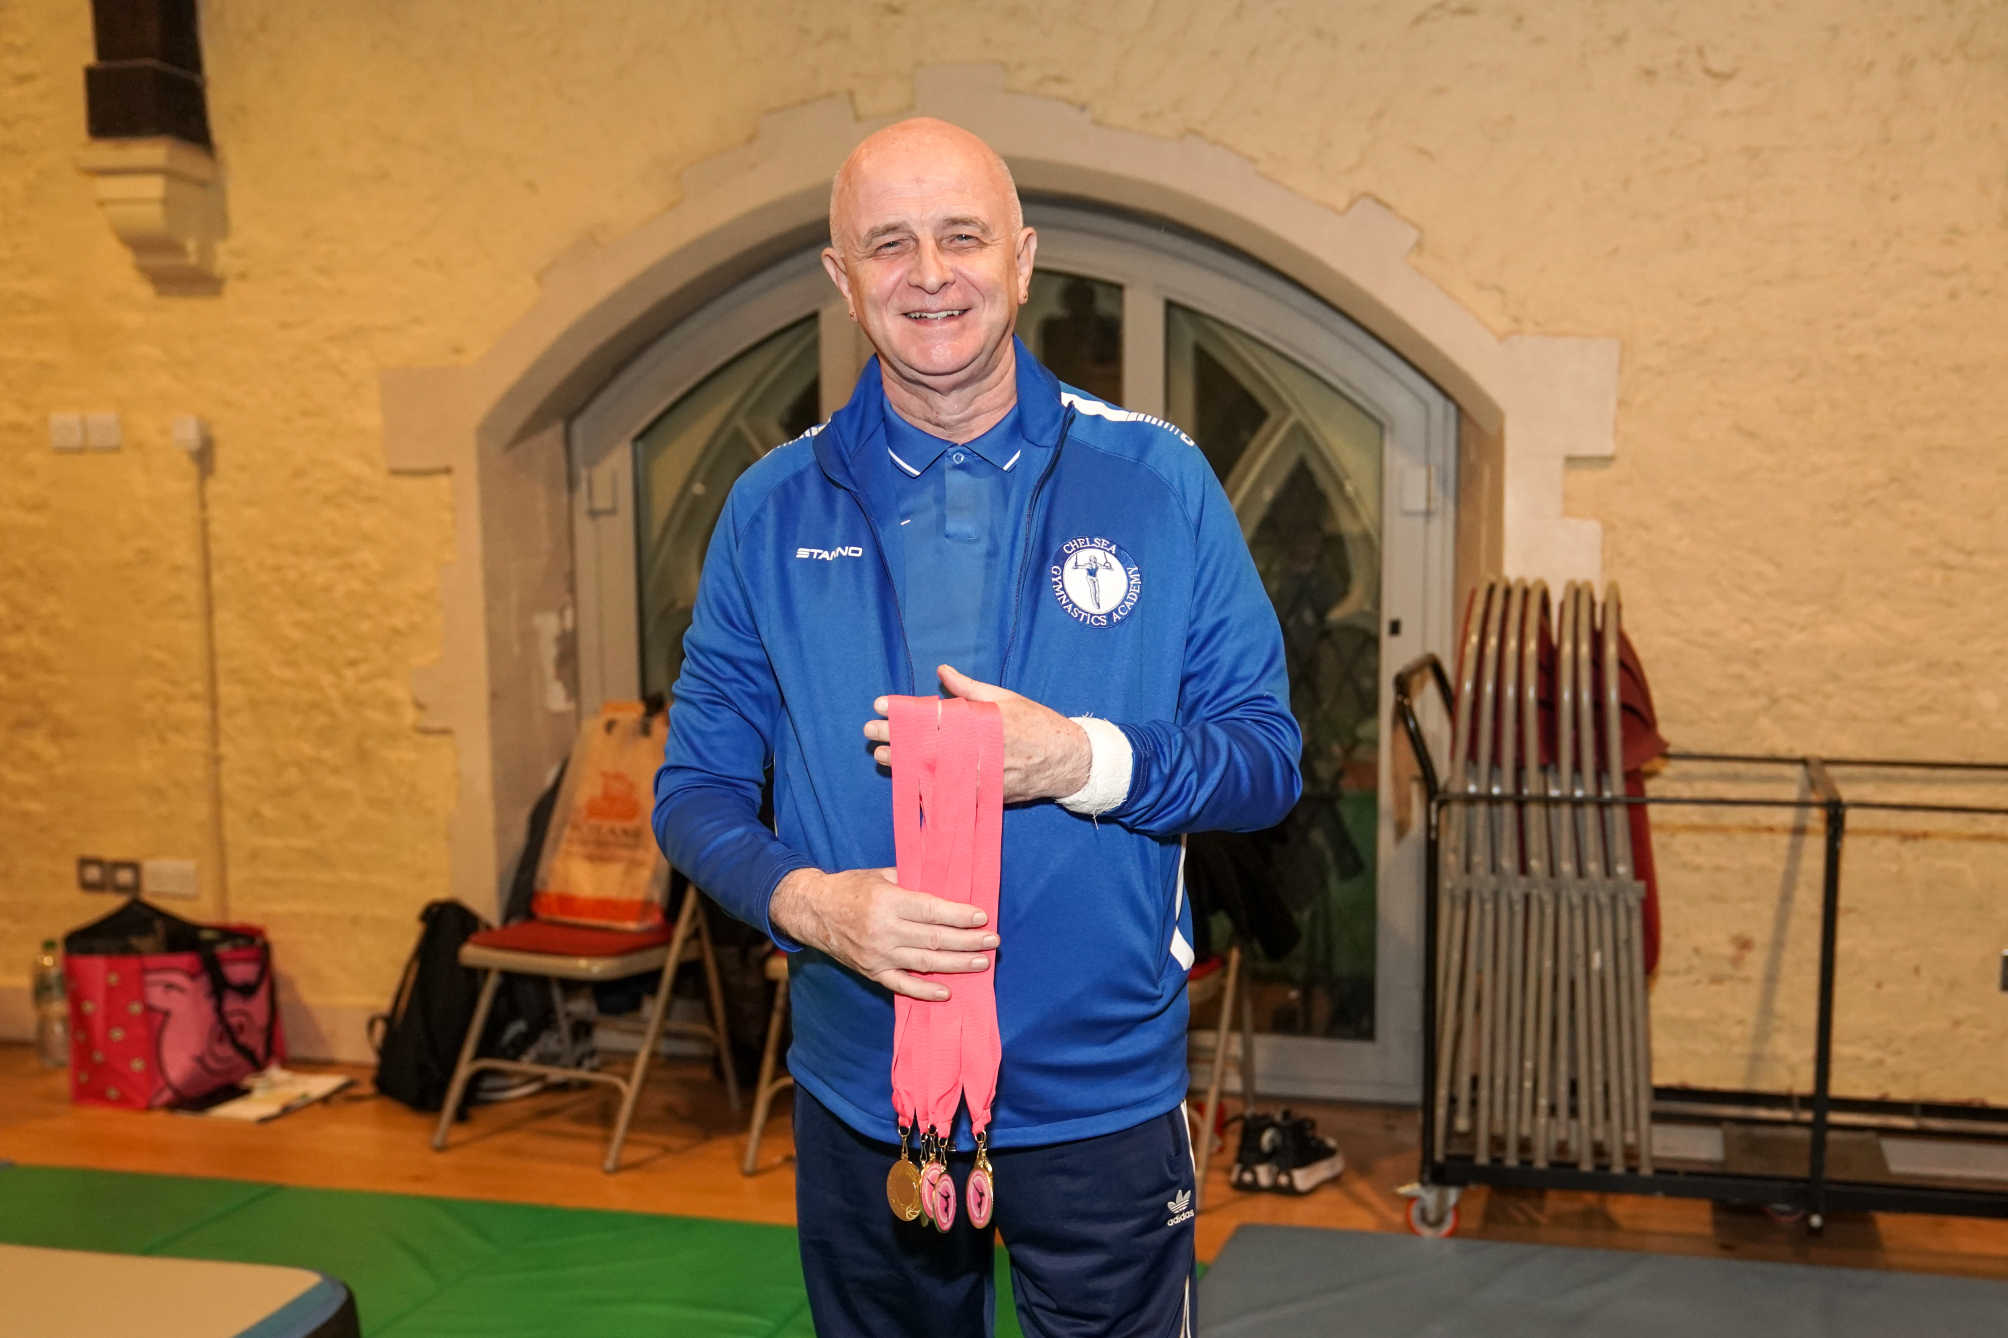 Coach Maurice joined Chelsea Gymnastics Academy